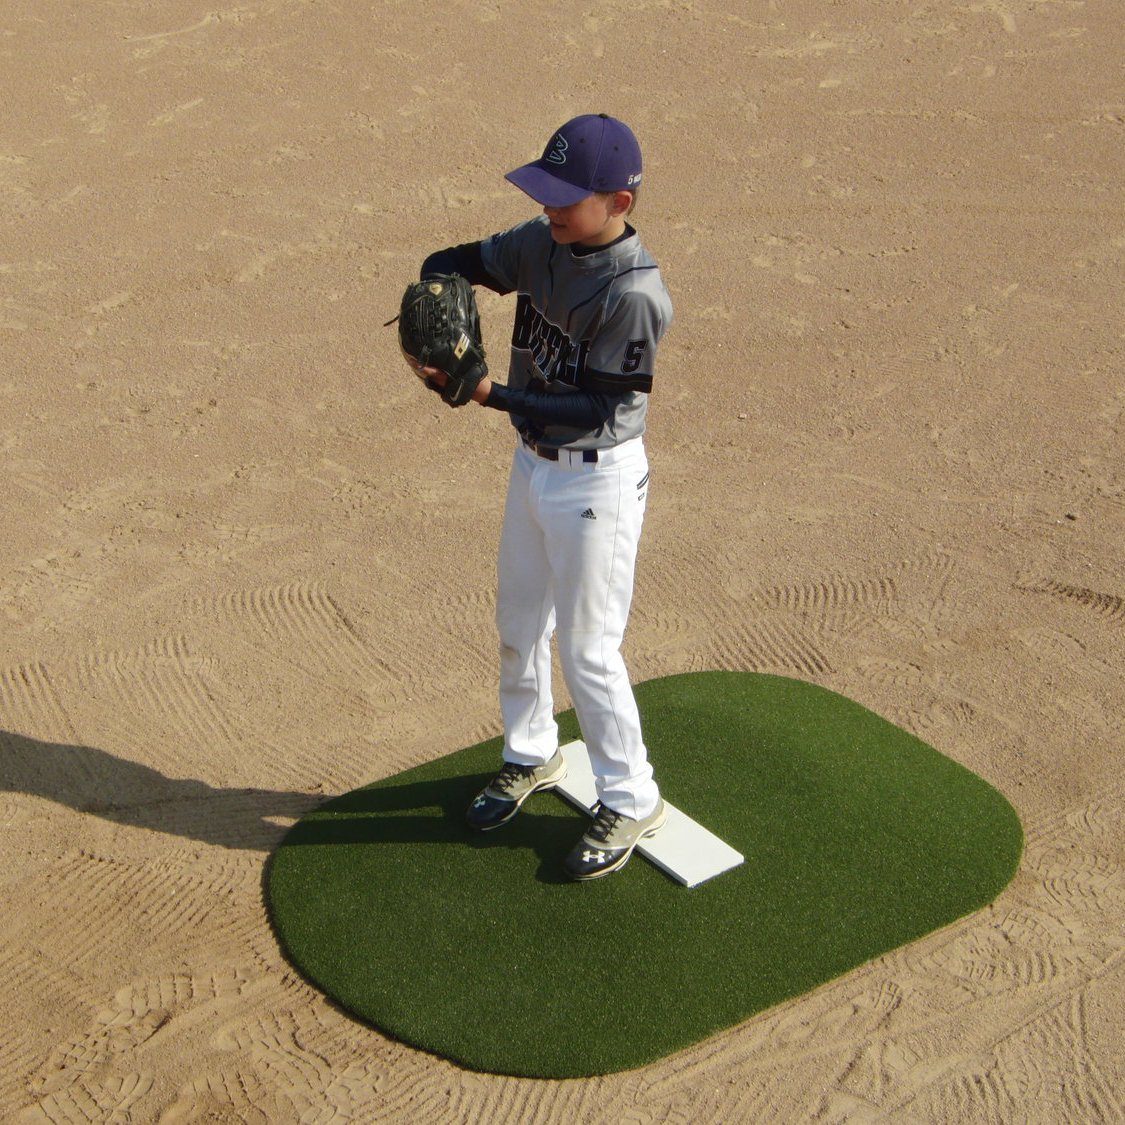 PortoLite 6" Stride Off Portable Game Pitching Mound For Baseball